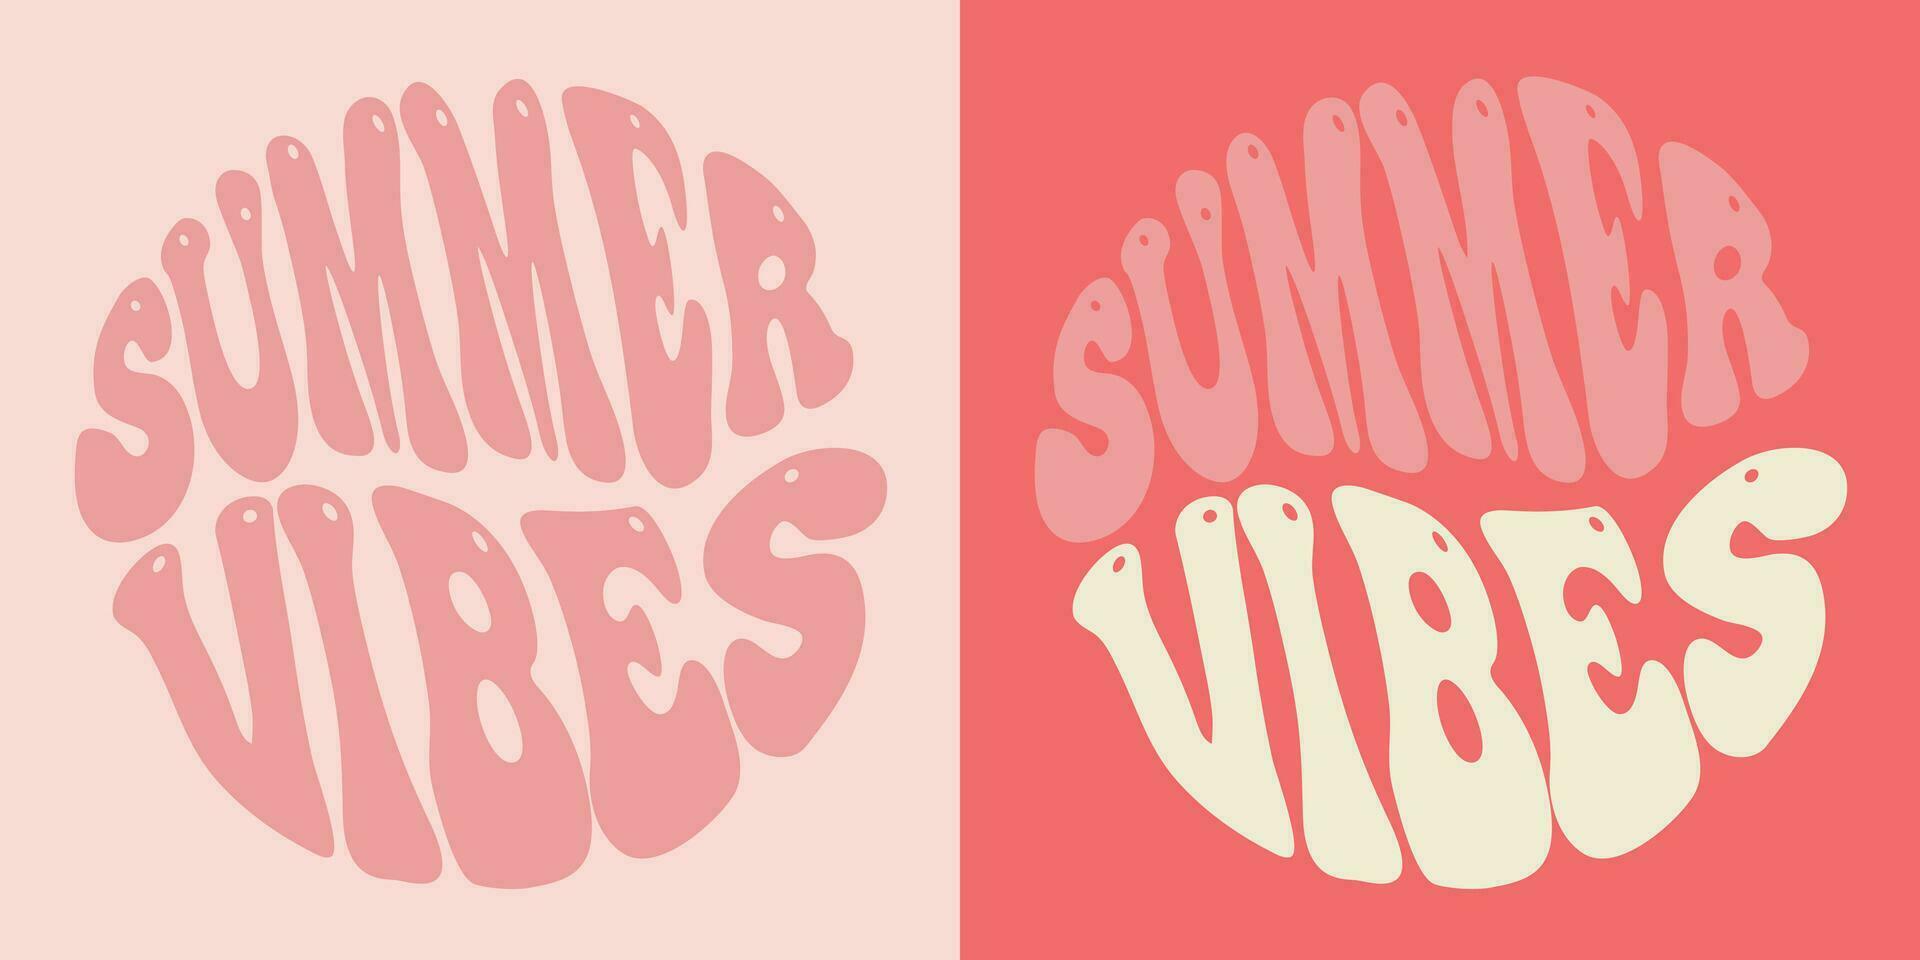 maravilloso letras verano onda. color eslogan en redondo forma. positivo motivacional cita. de moda maravilloso impresión diseño para carteles, tarjetas, camiseta. vector